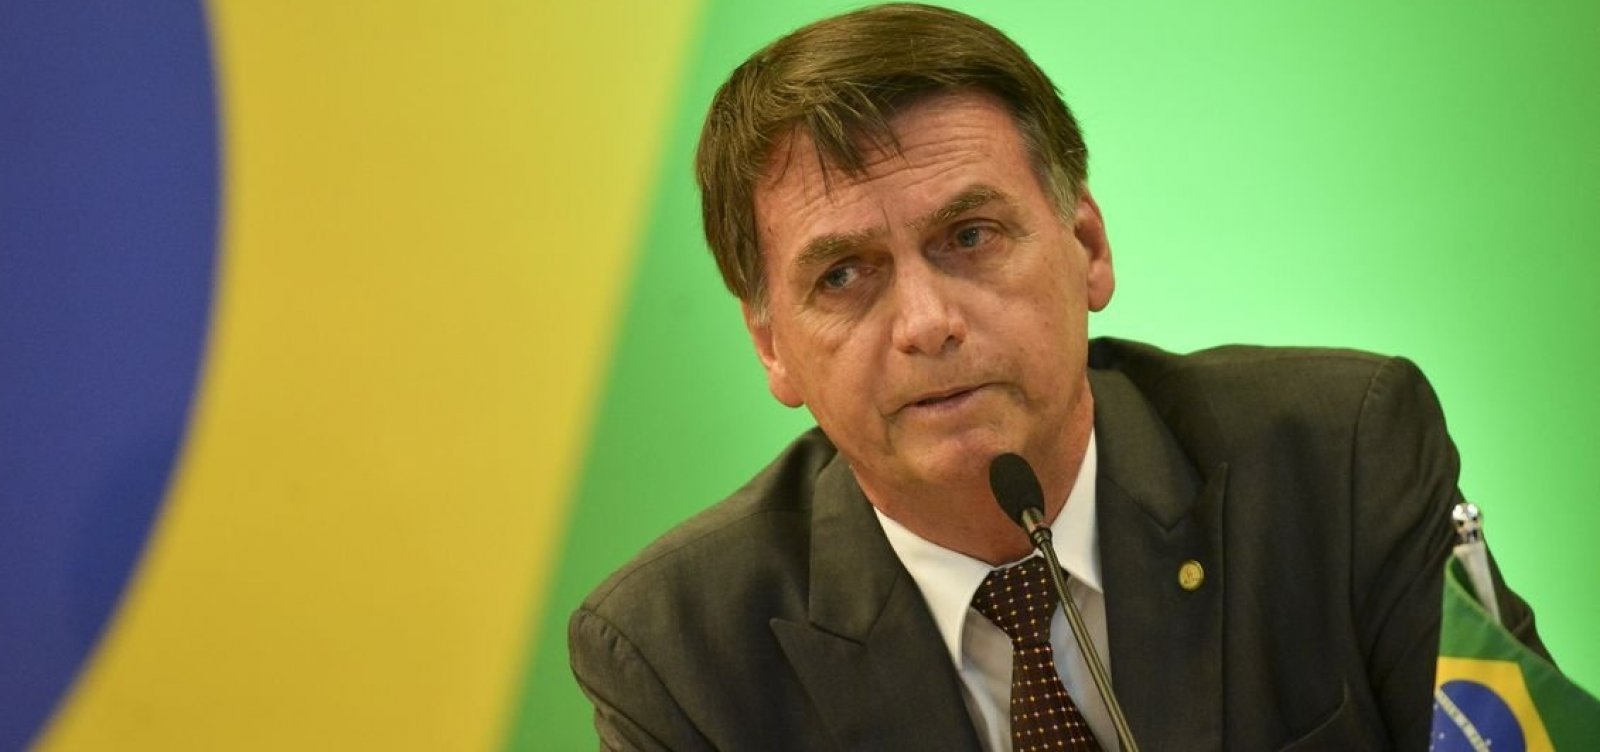 Governo de Bolsonaro terá que cortar R$ 37 bi em gastos por ano para cumprir teto